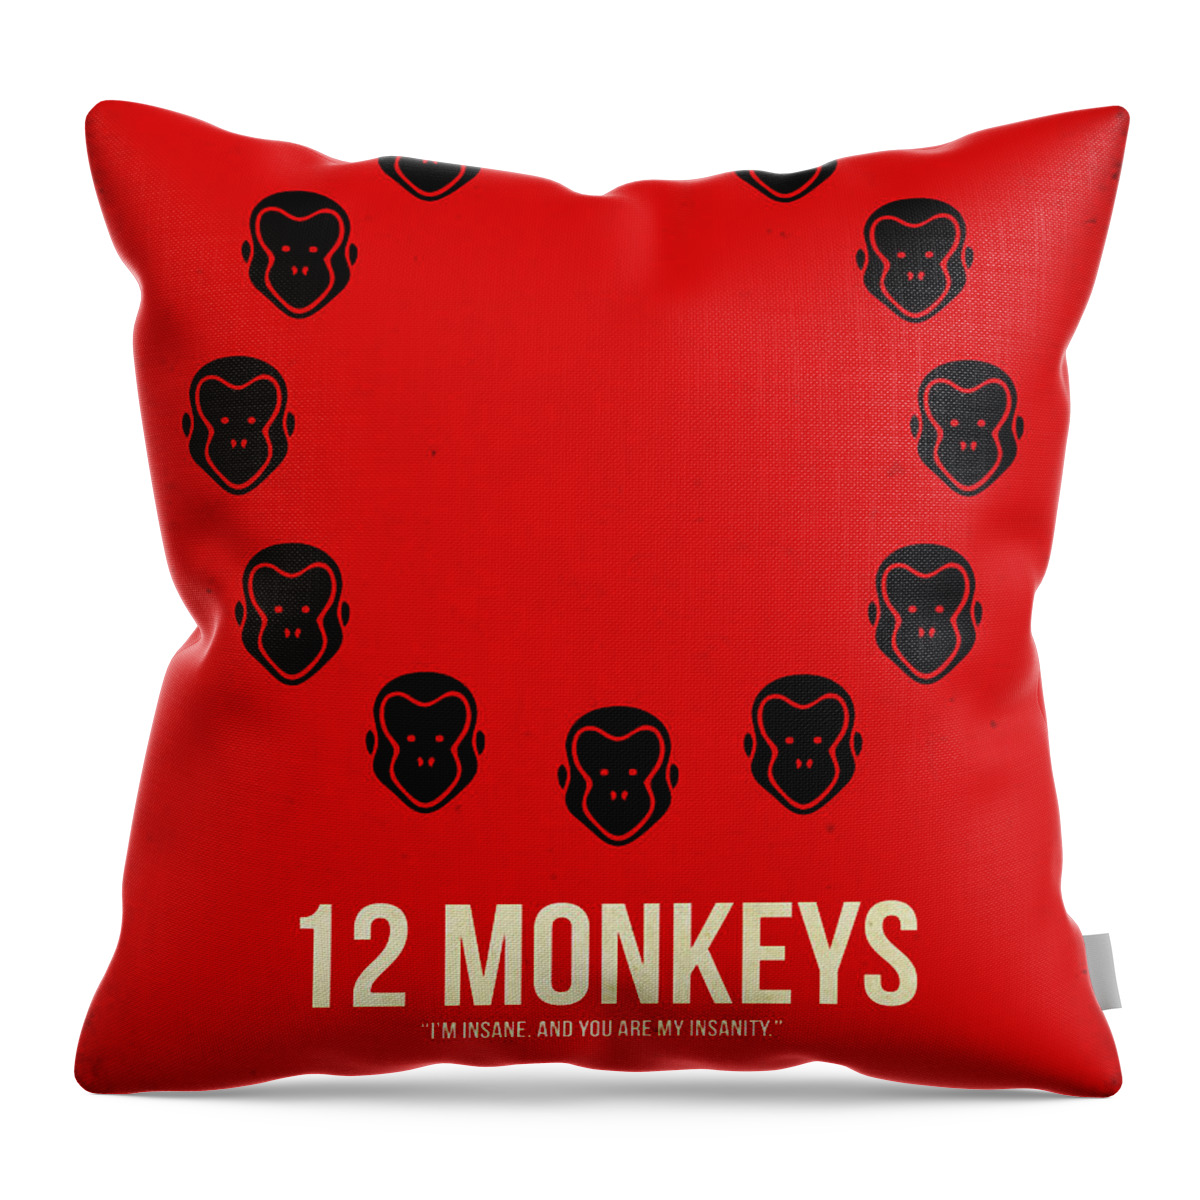 12 Monkeys Throw Pillow featuring the digital art 12 Monkeys by Naxart Studio